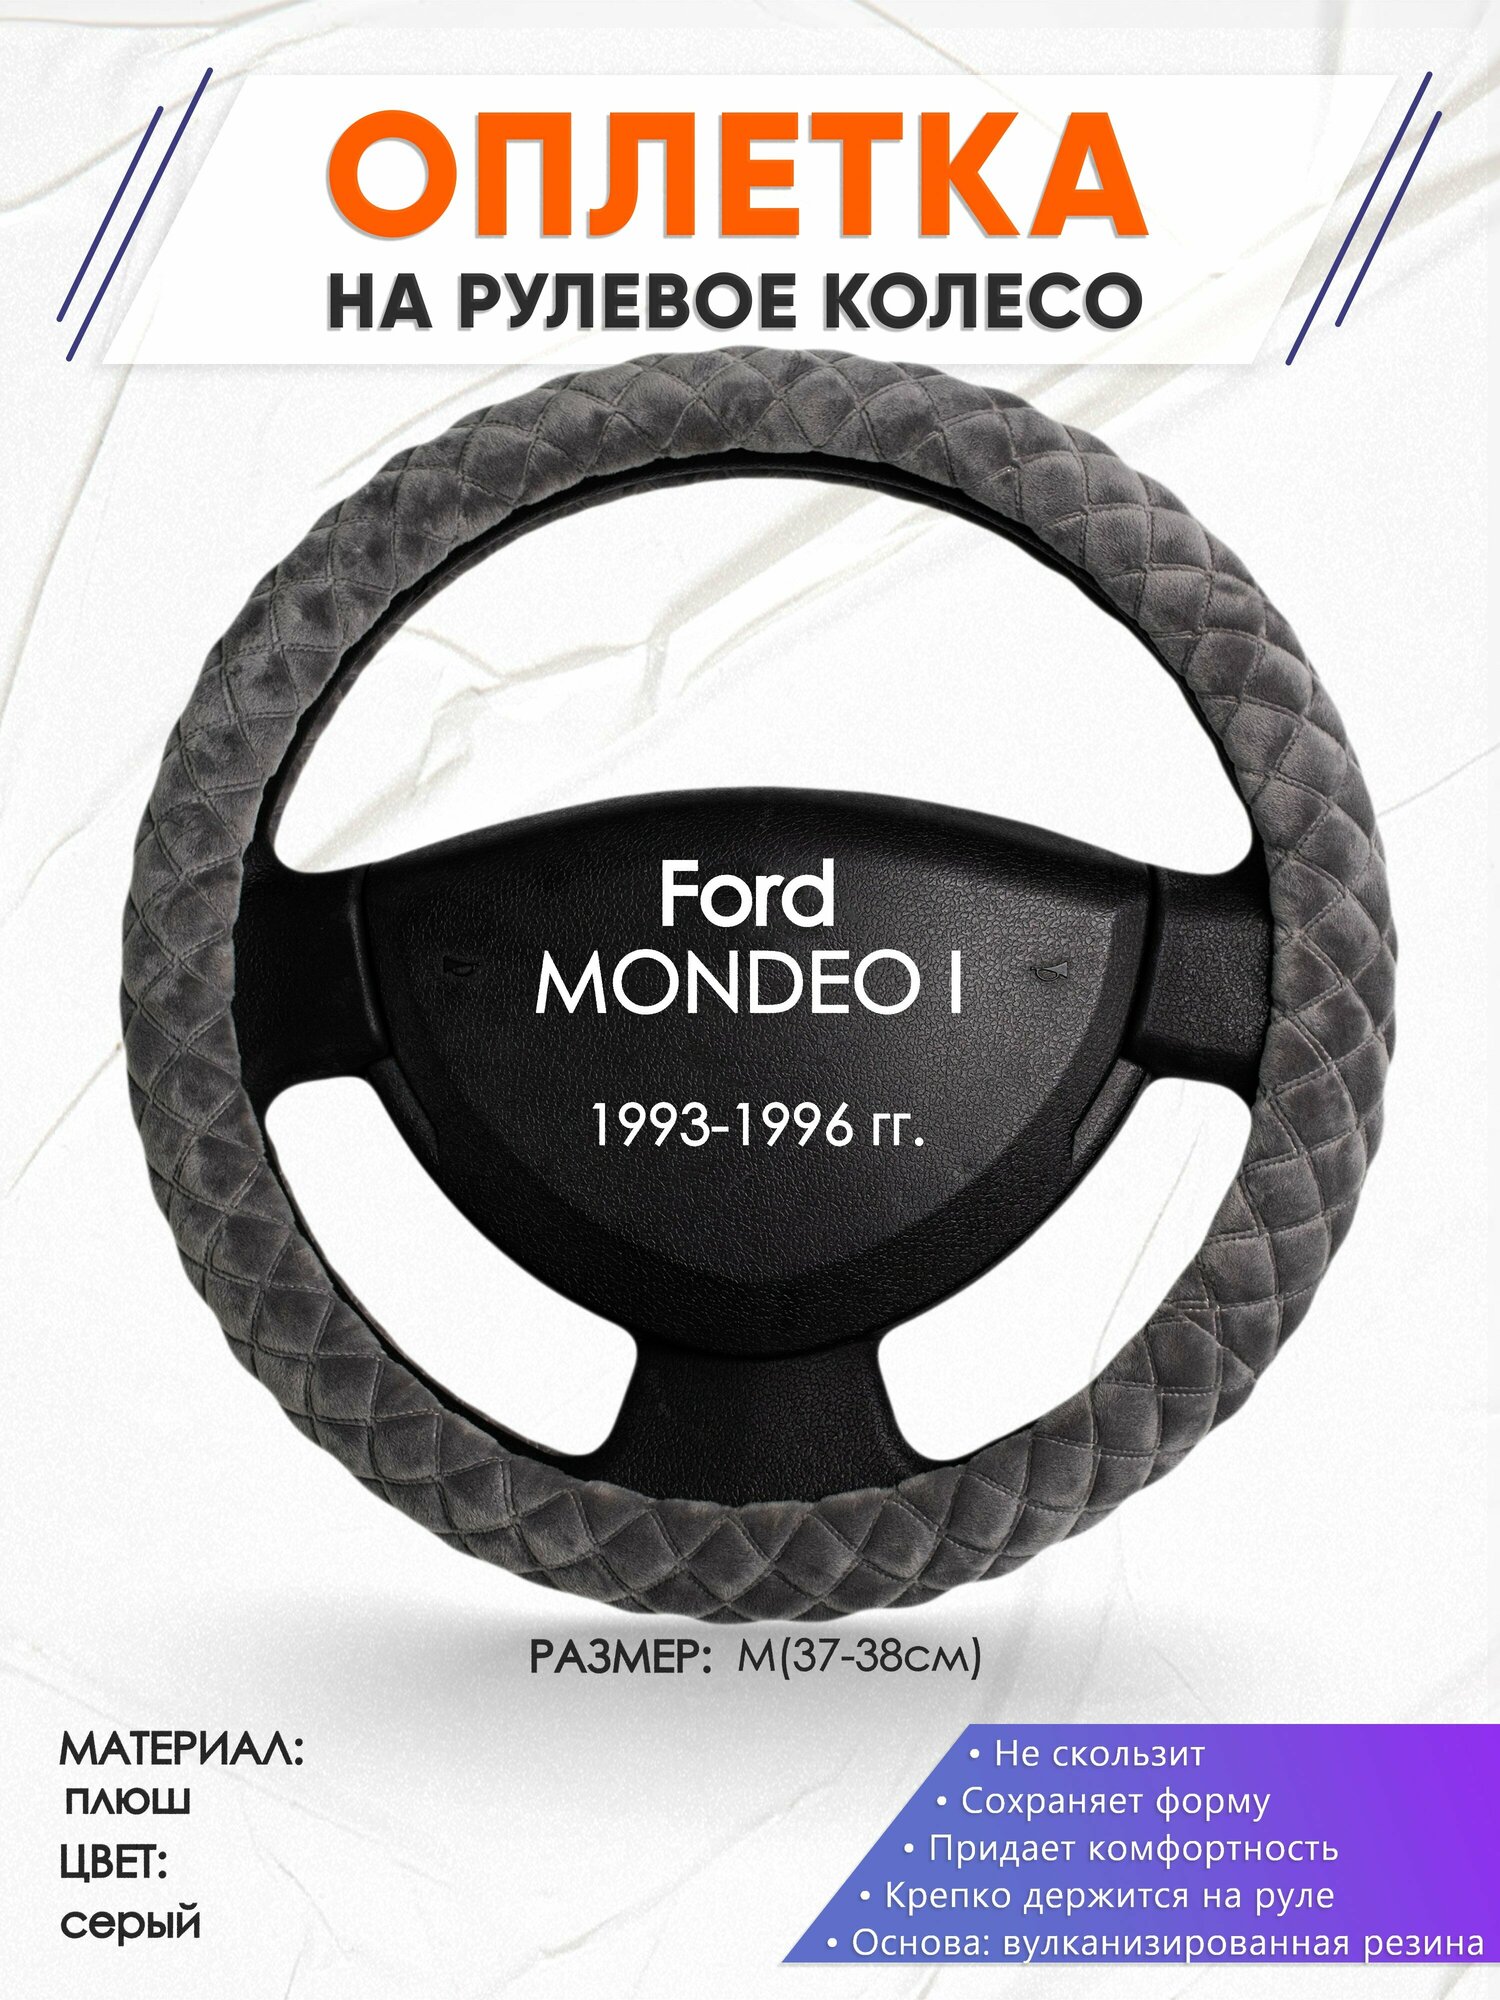 Оплетка наруль для Ford MONDEO 1(Форд Мондео 1) 1993-1996 годов выпуска, размер M(37-38см), Замша 35